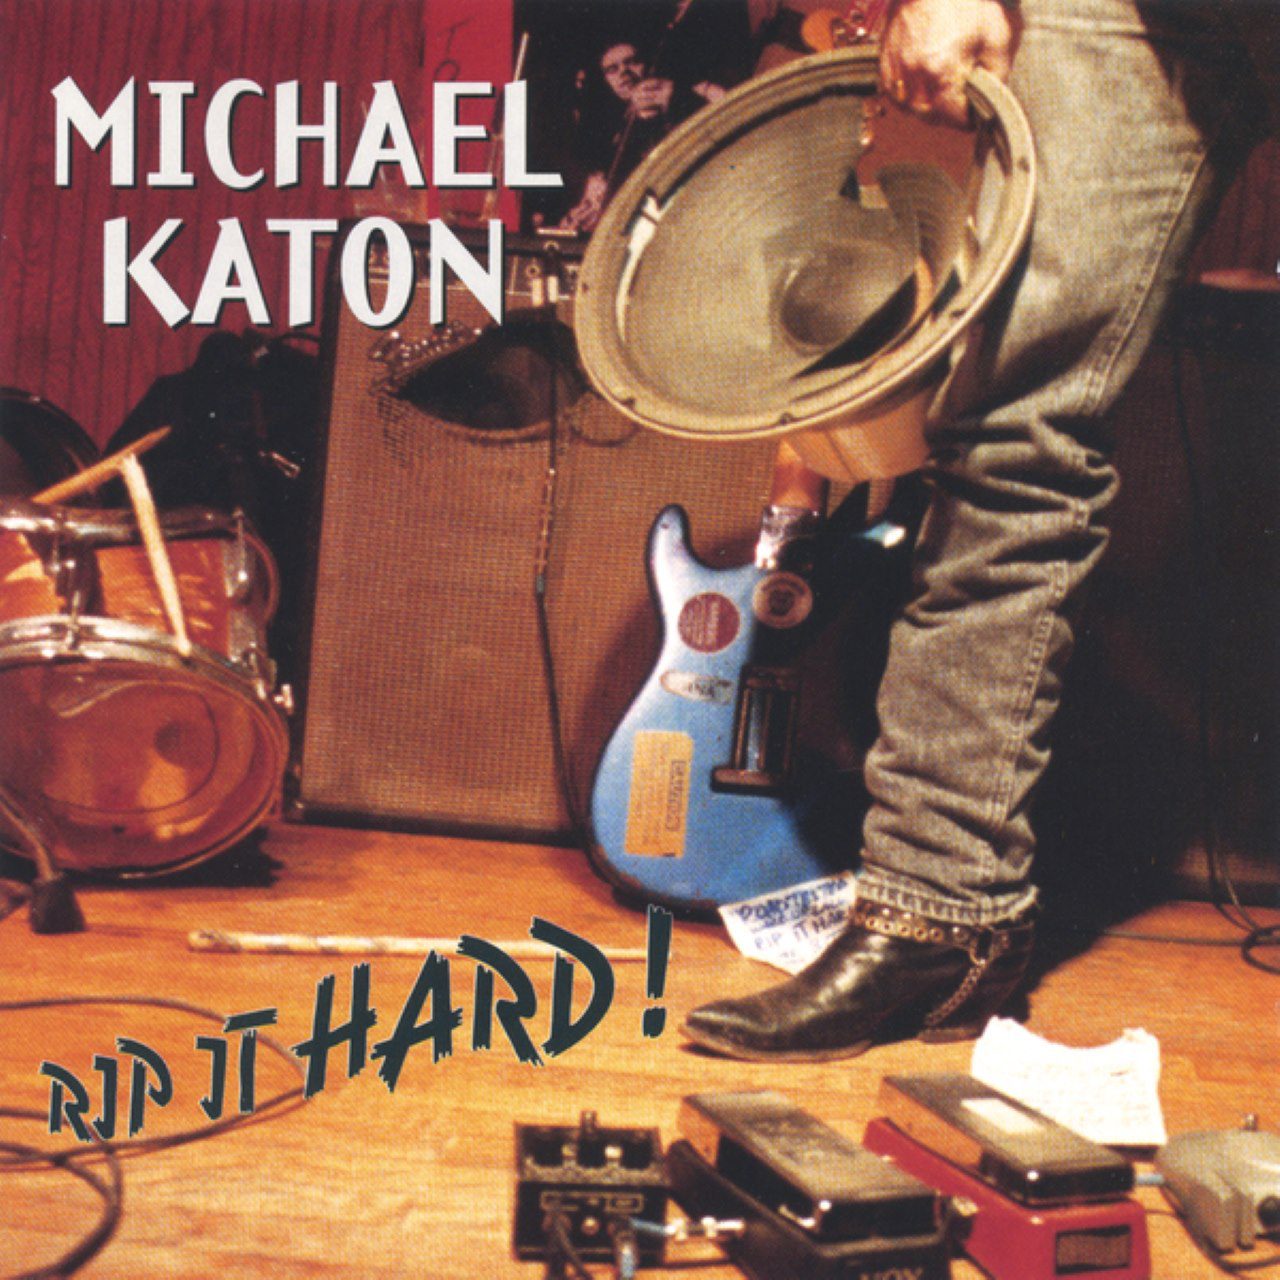 Michael Katon – Rip It Hard cover album